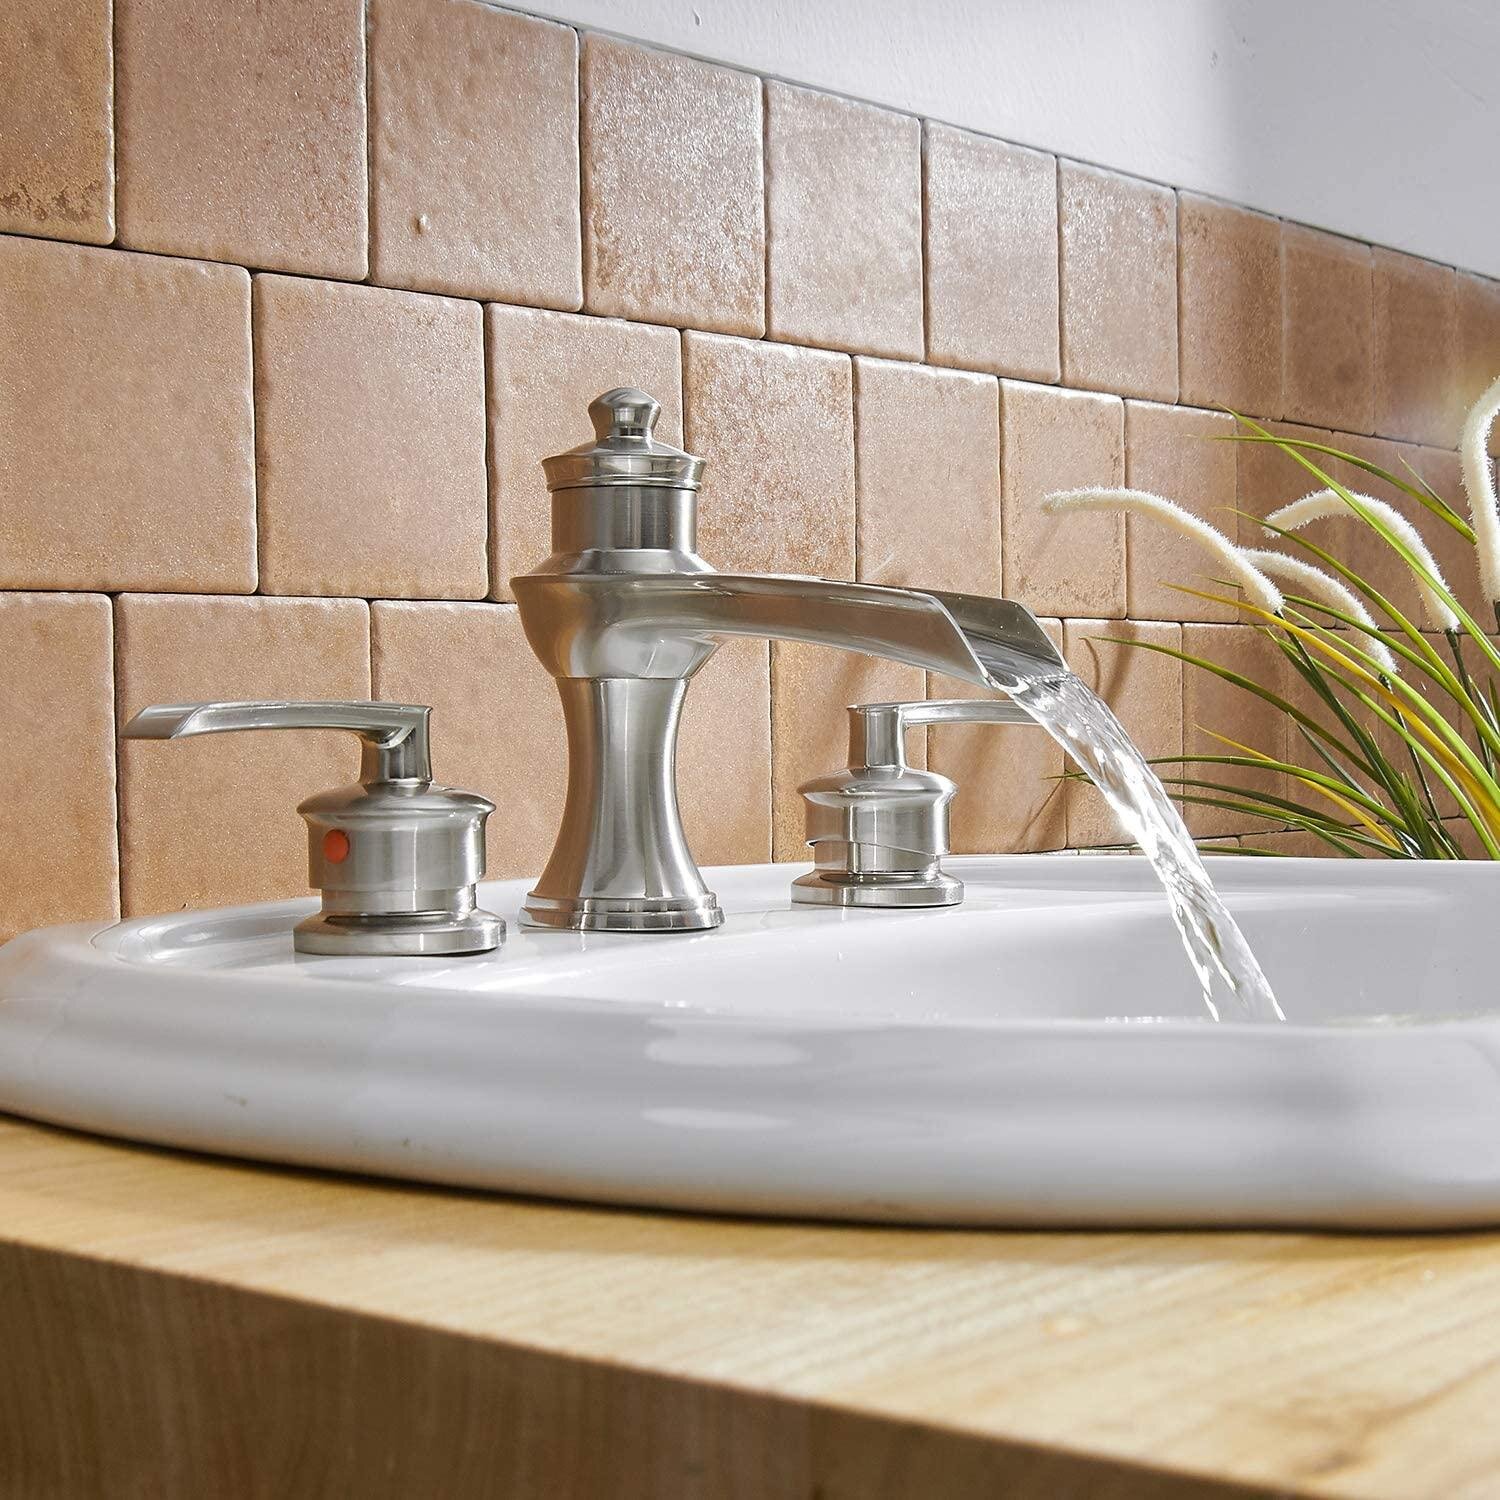 Square Gold Polished Bathroom Basin Waterfall Faucet Washroom Vanity Mixer Tap